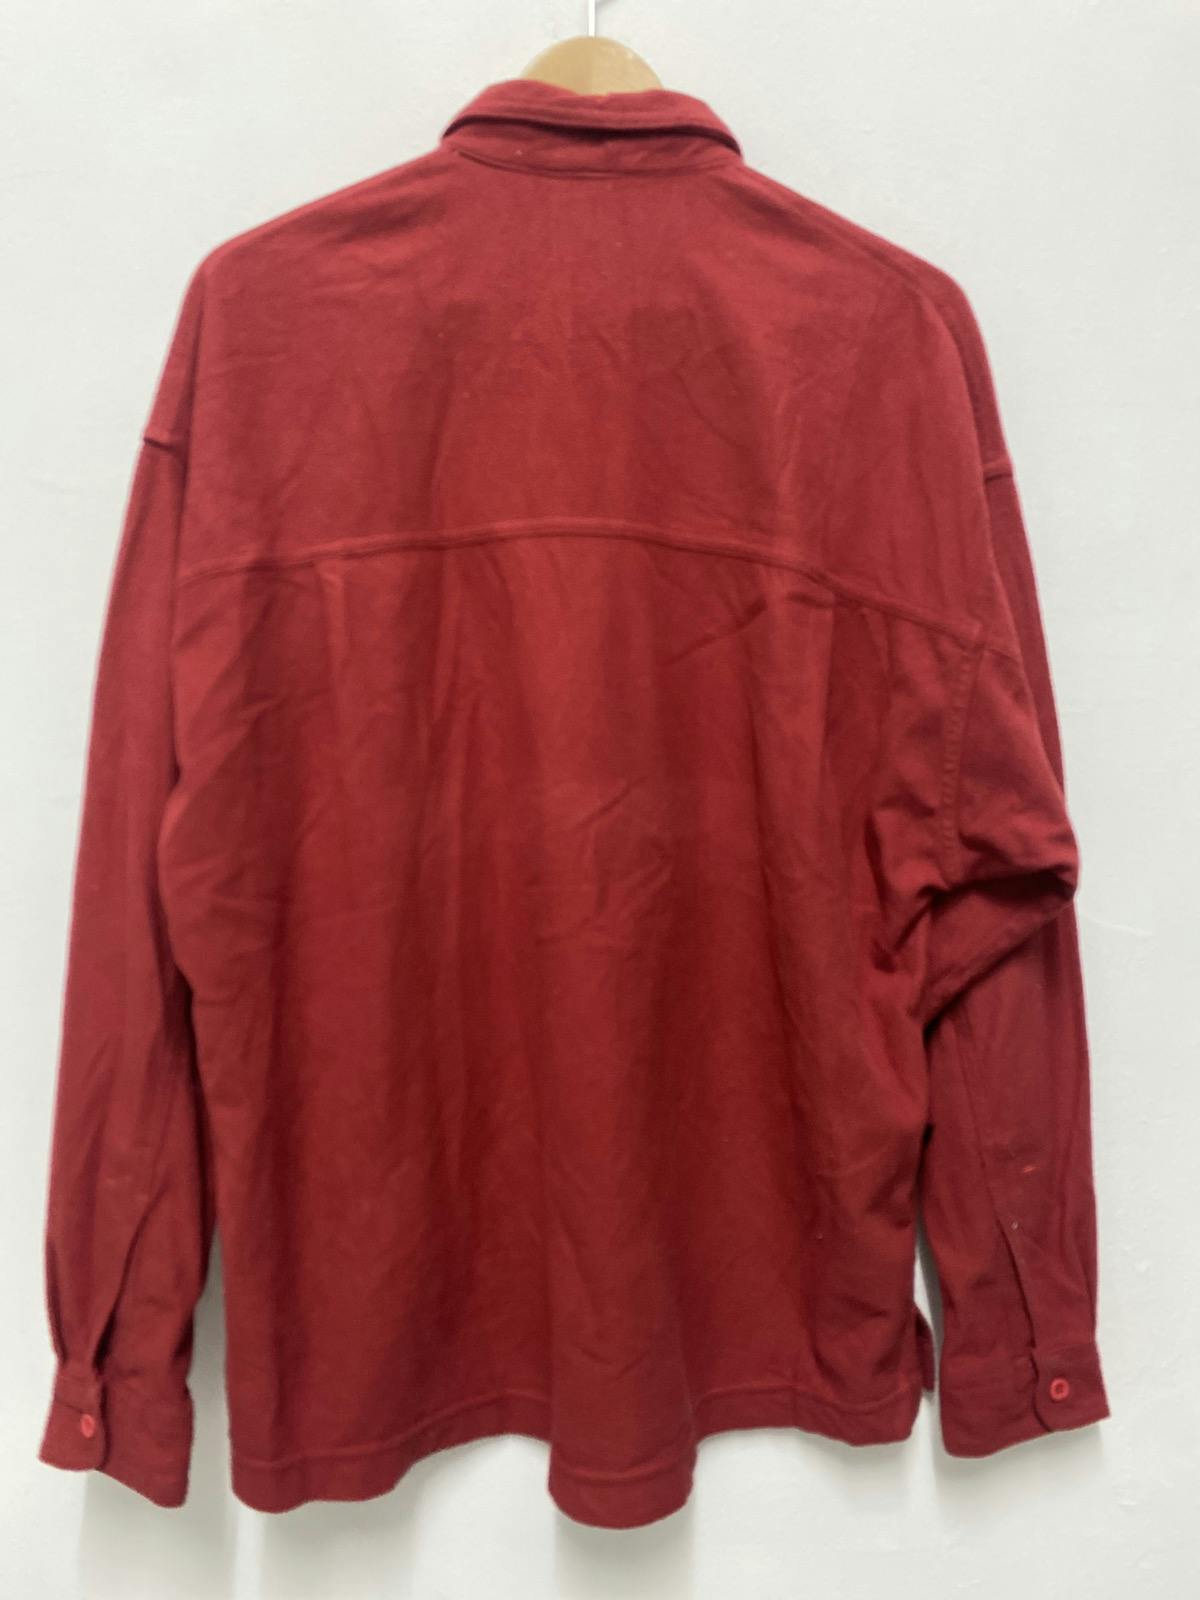 NIKE ACG red long sleeve fleece shirt - 2